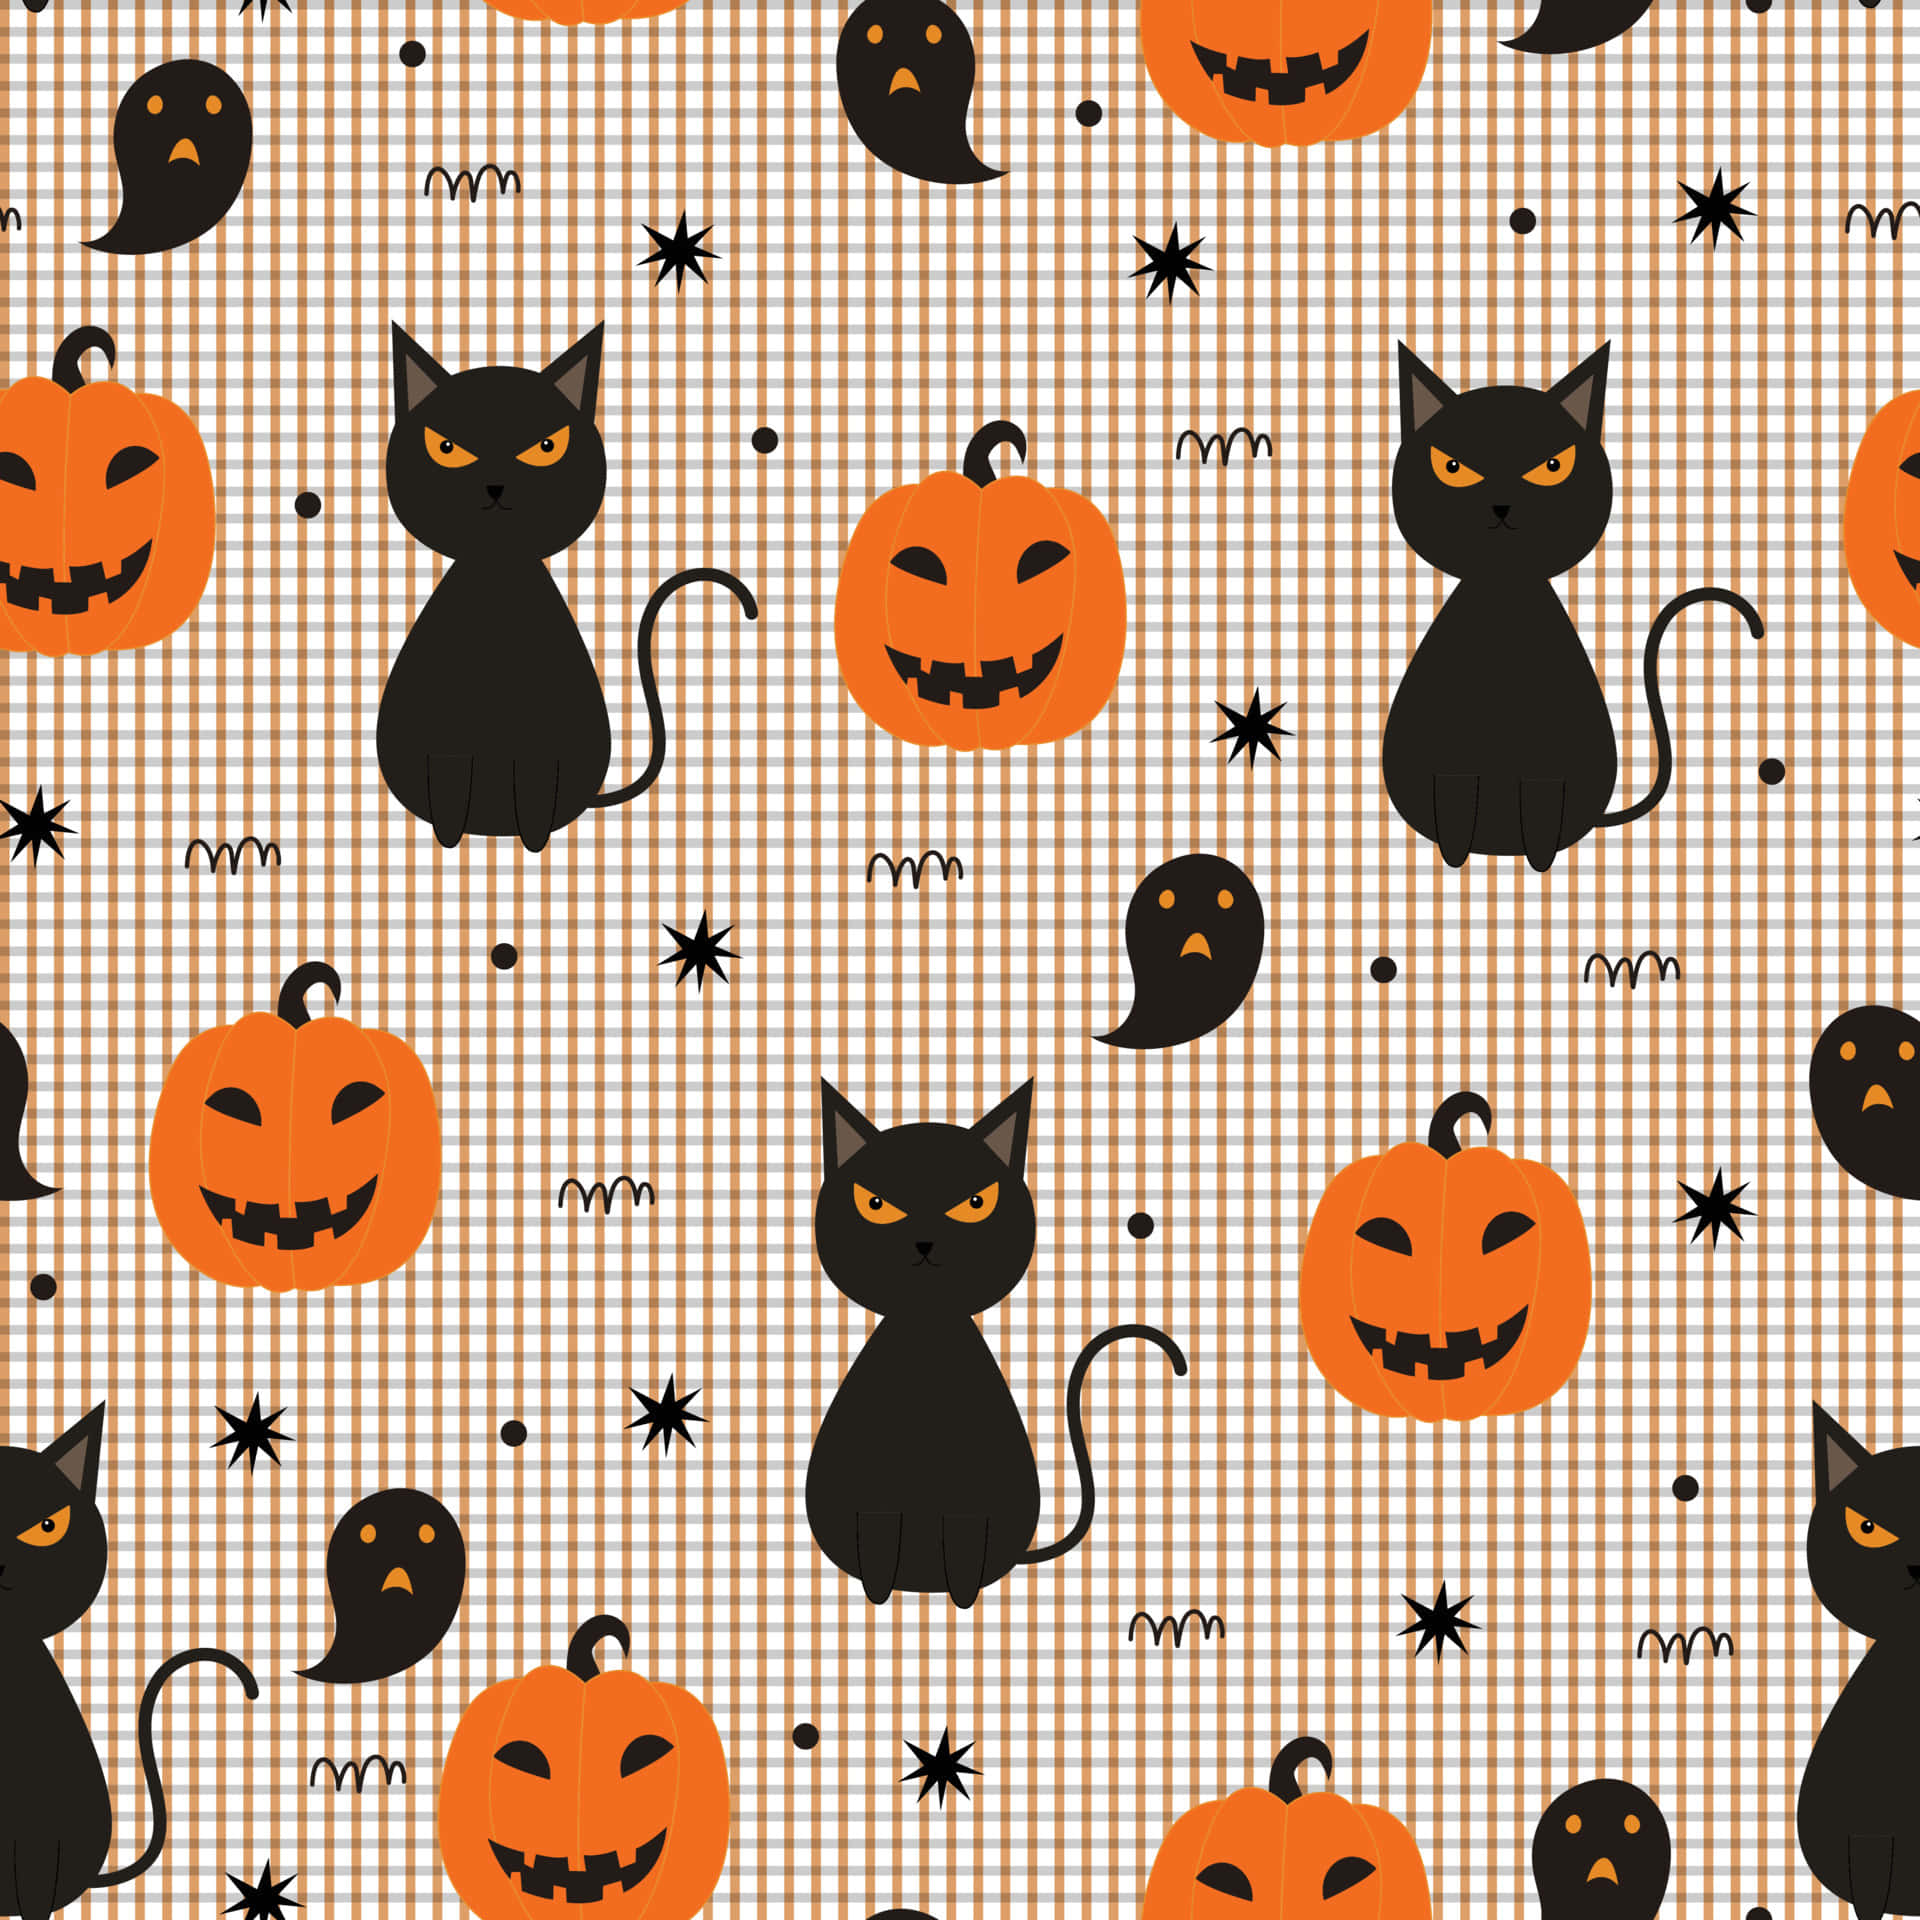 ¡elasustadizo Gato Se Transforma De Manera Espeluznante En Esta Noche De Halloween! Fondo de pantalla